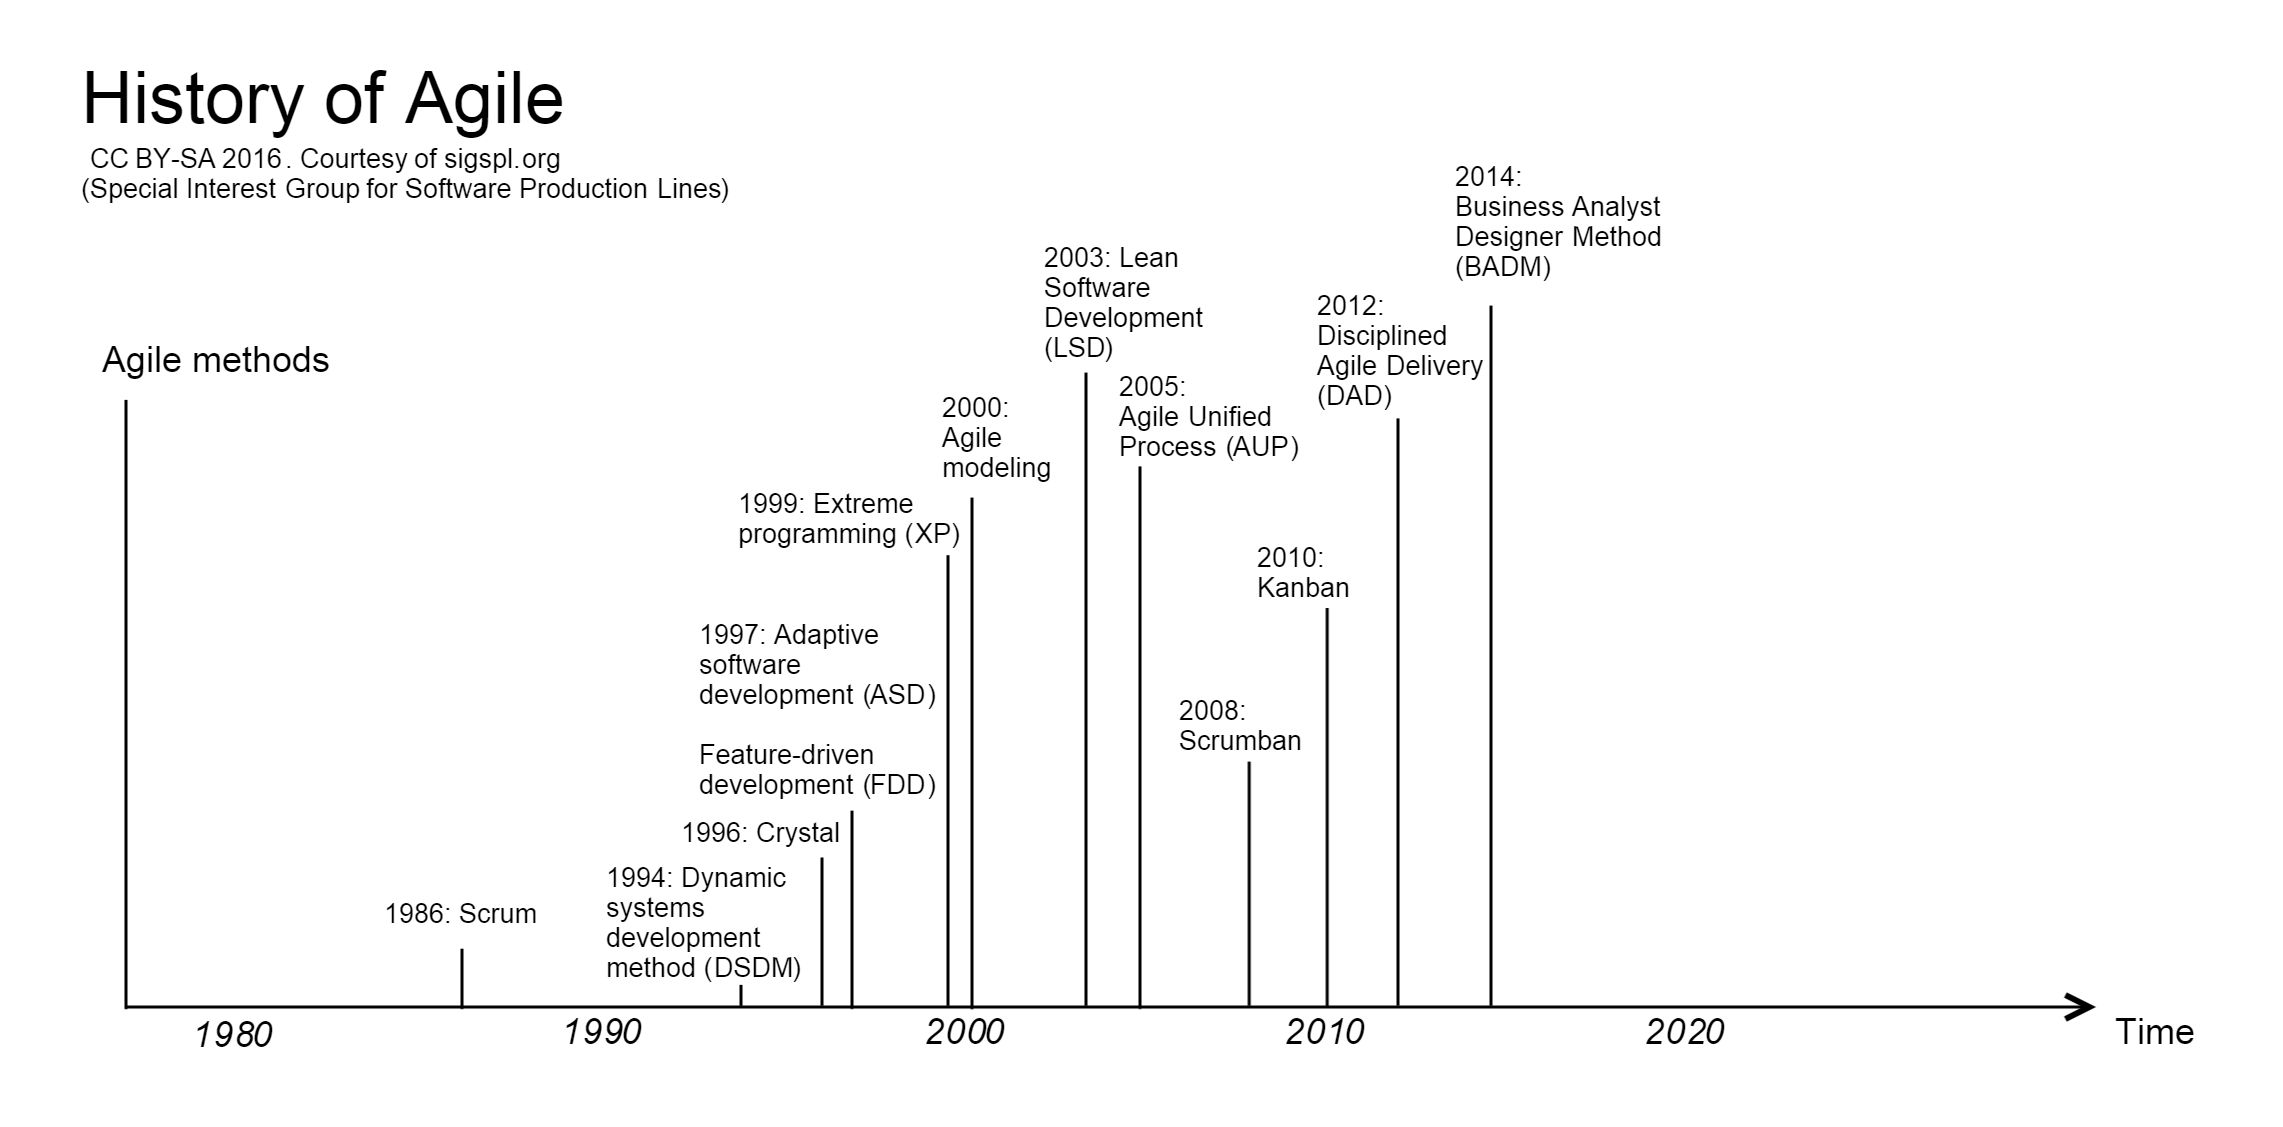 History of Agile, Credit - Wikipedia